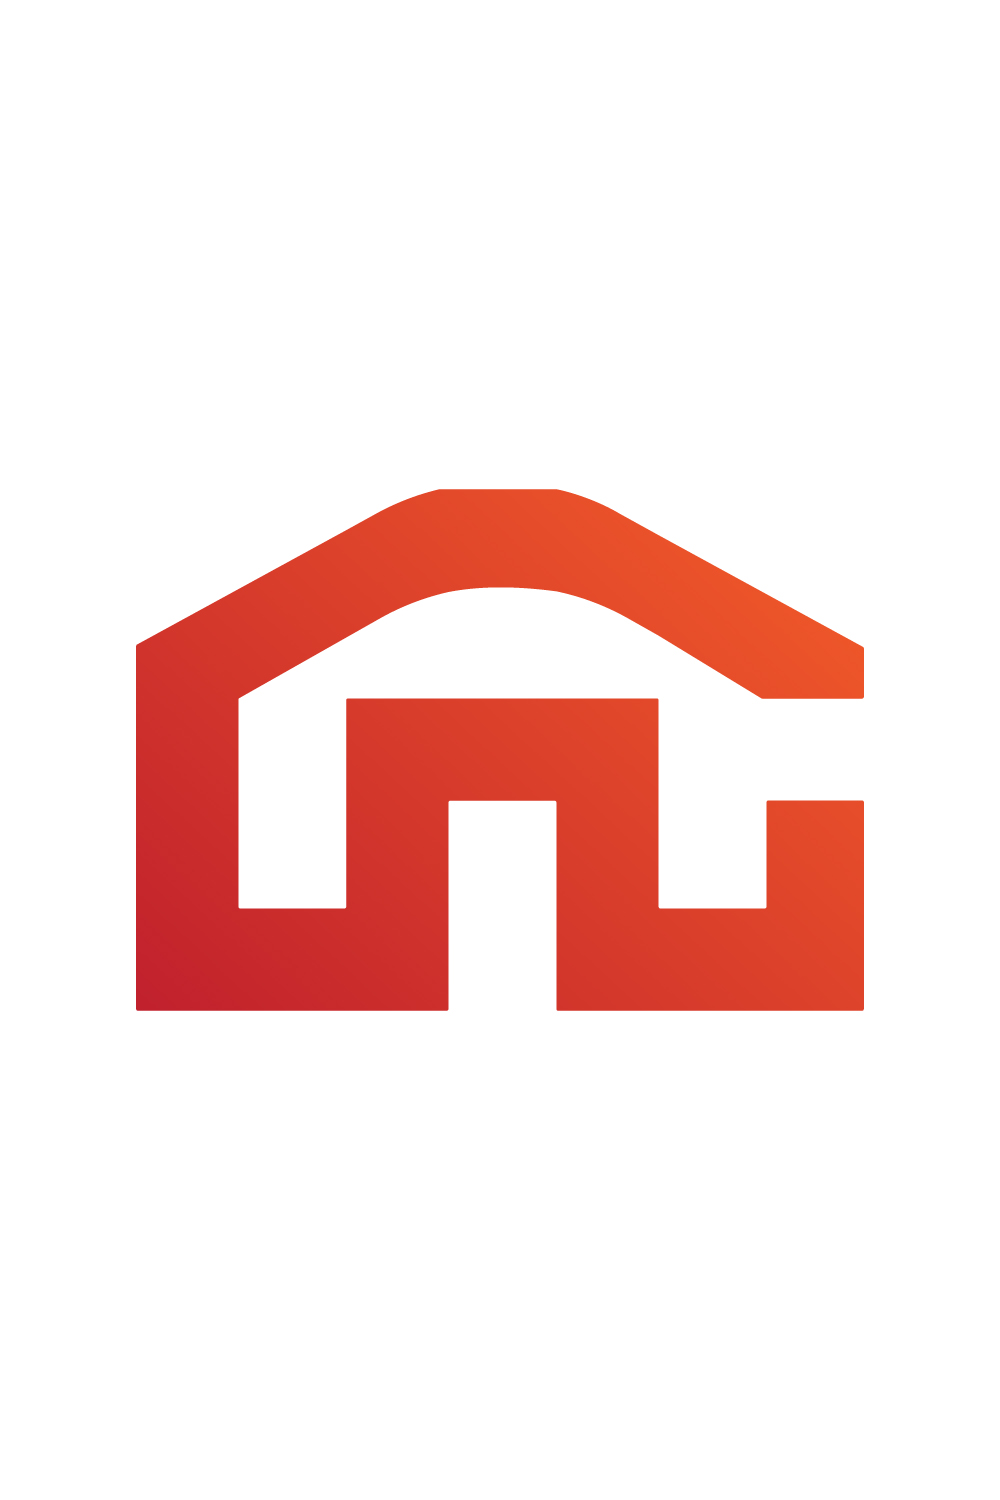 Initials M letters logo design M logo orange color best identity  M House Building logo design, template illustration pinterest preview image.